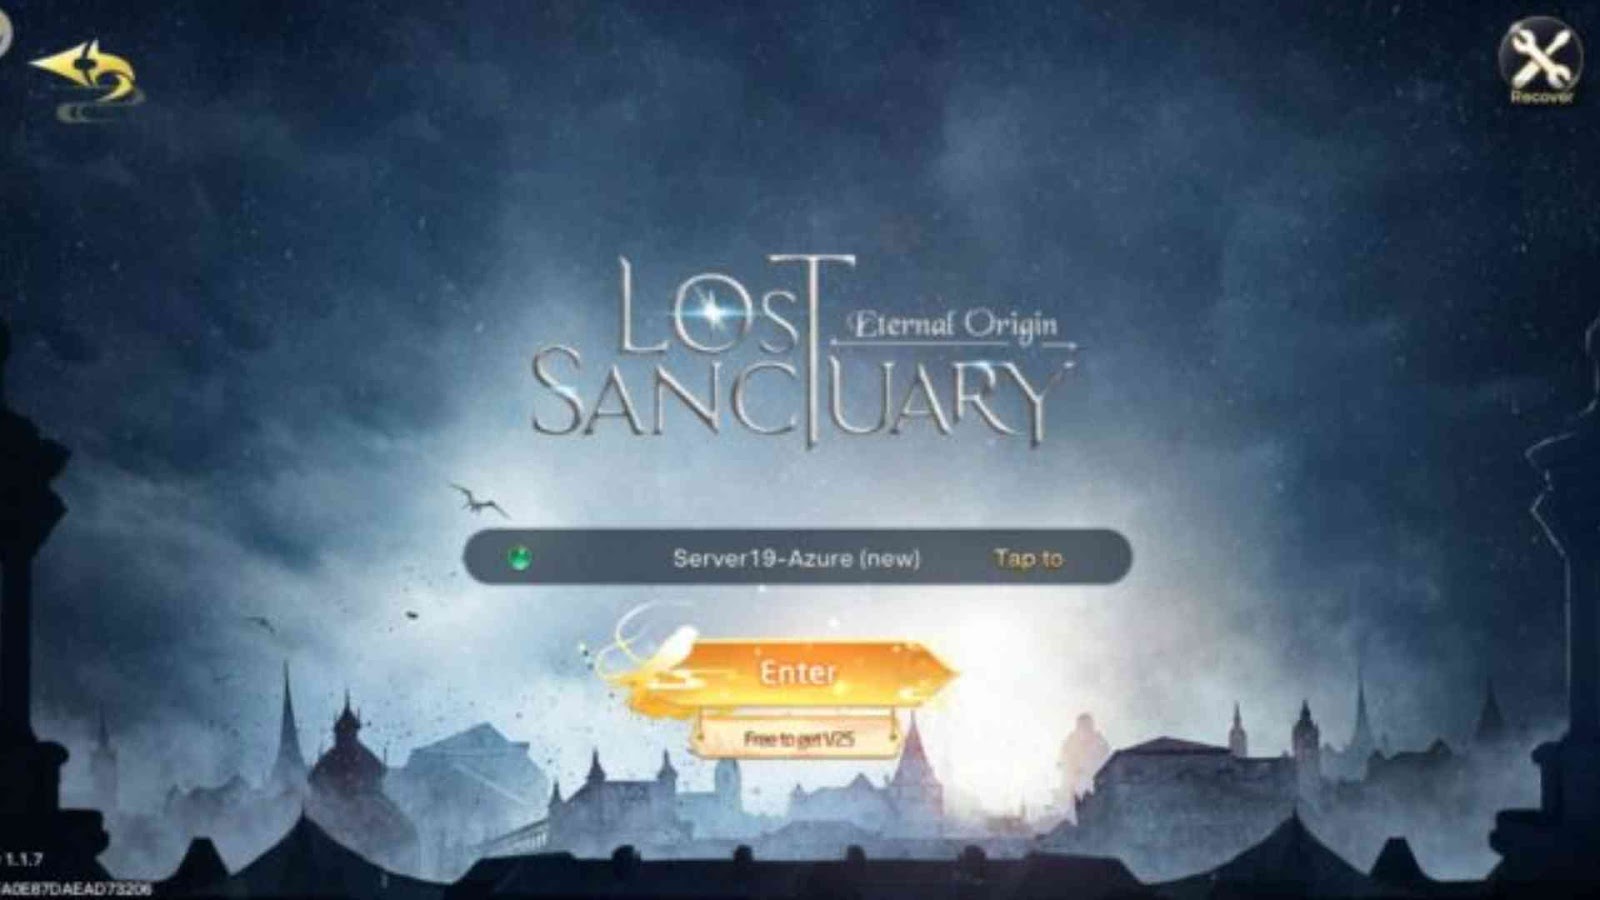 Lost Sanctuary: Eternal Origin on PC